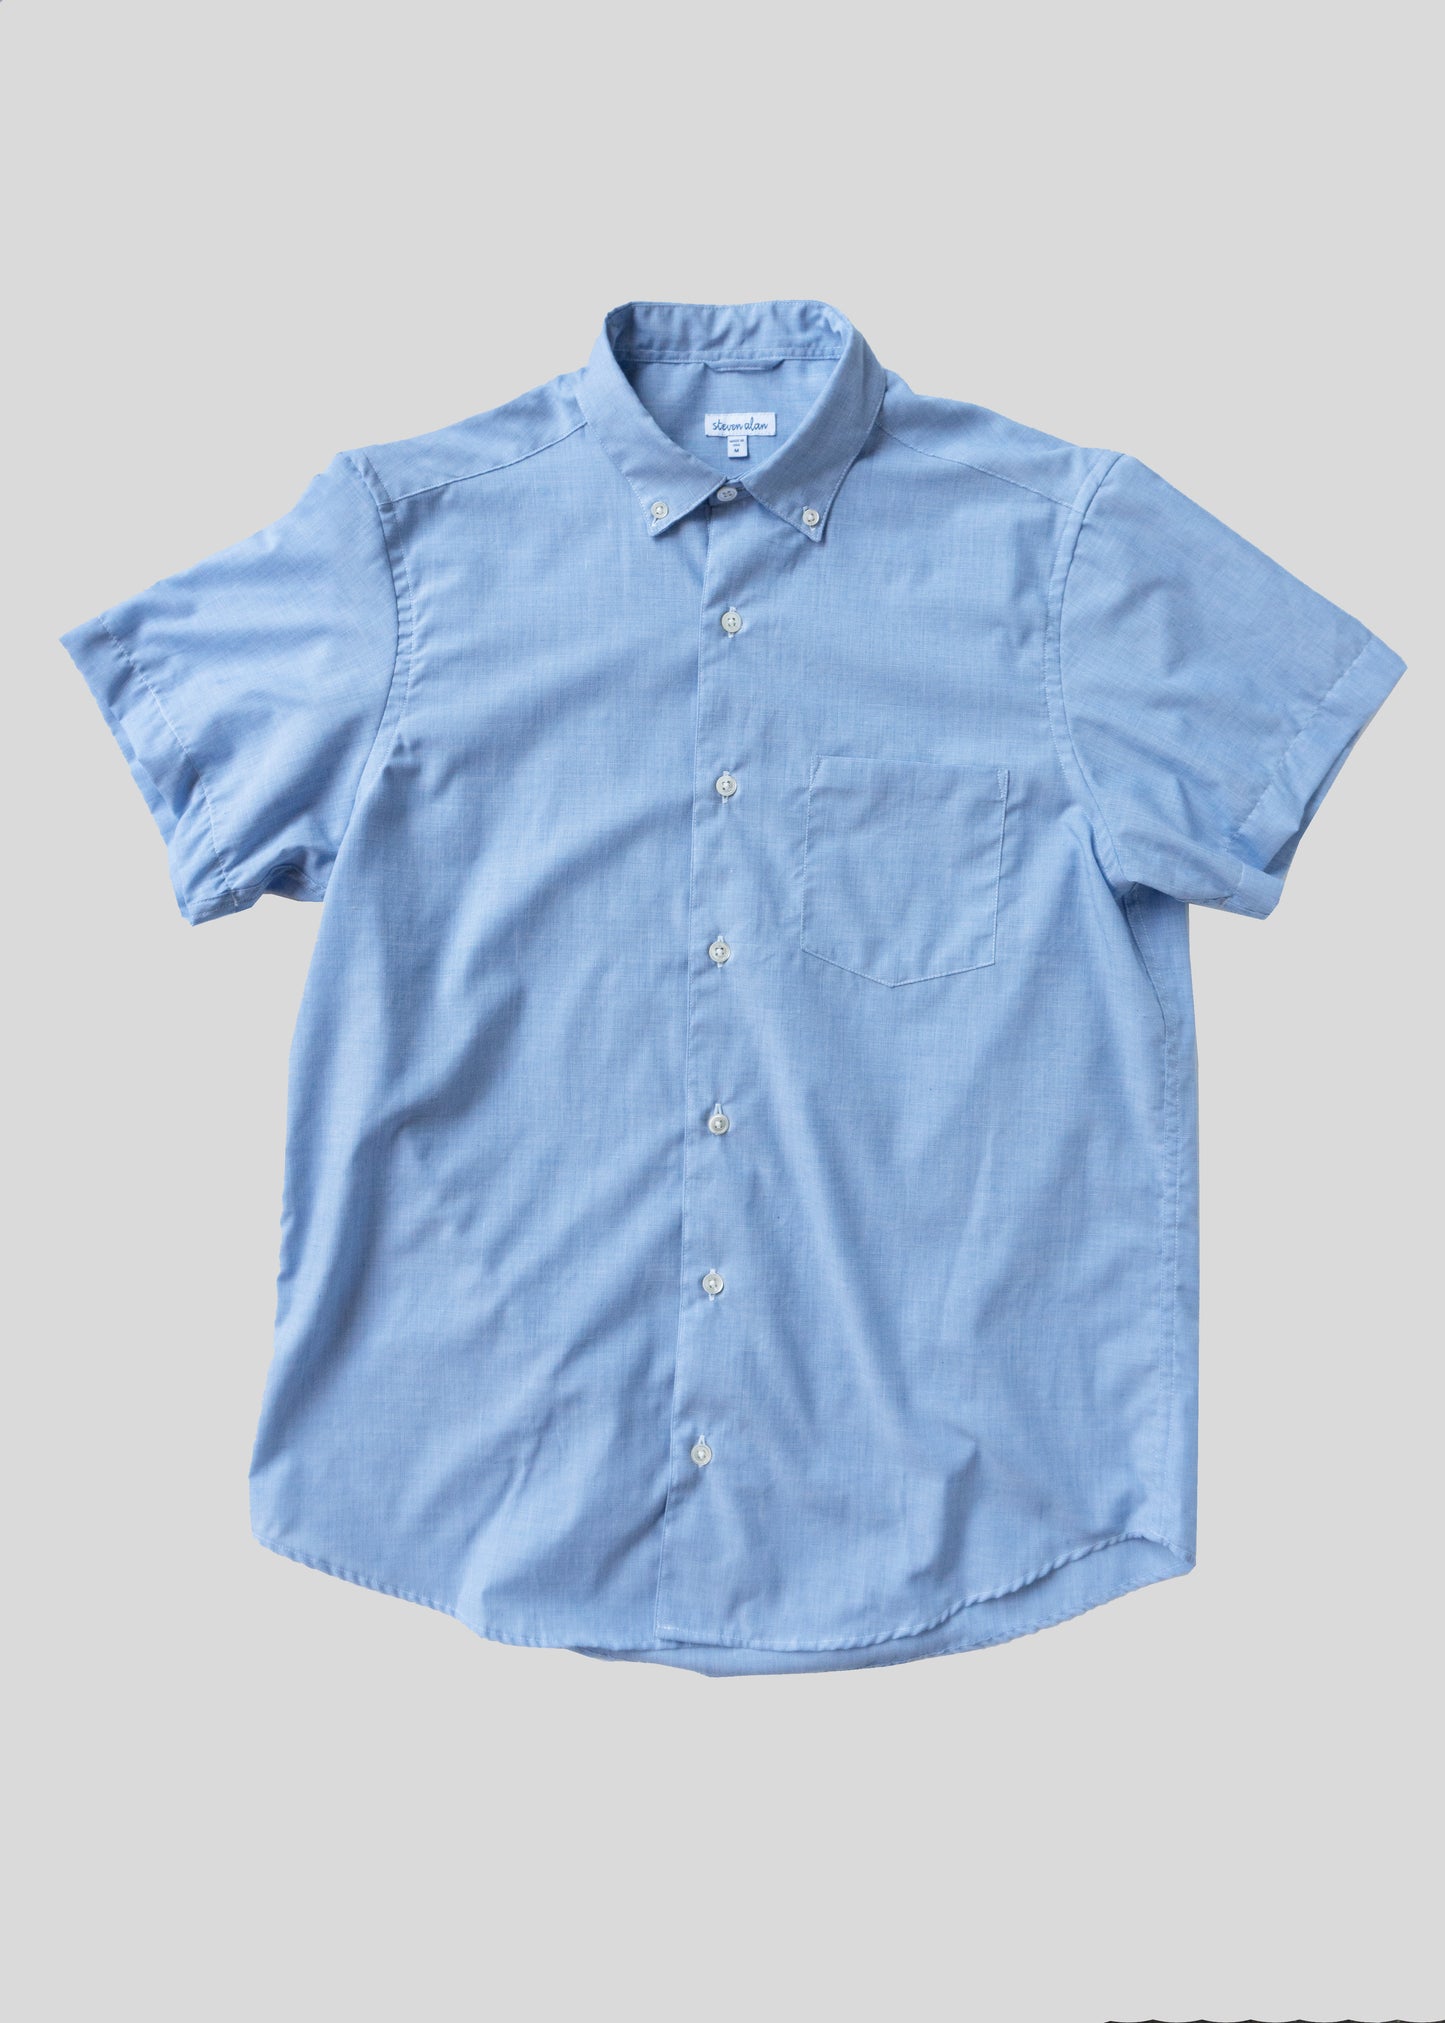 Short Sleeve Single Needle Shirt, Light Blue end on end